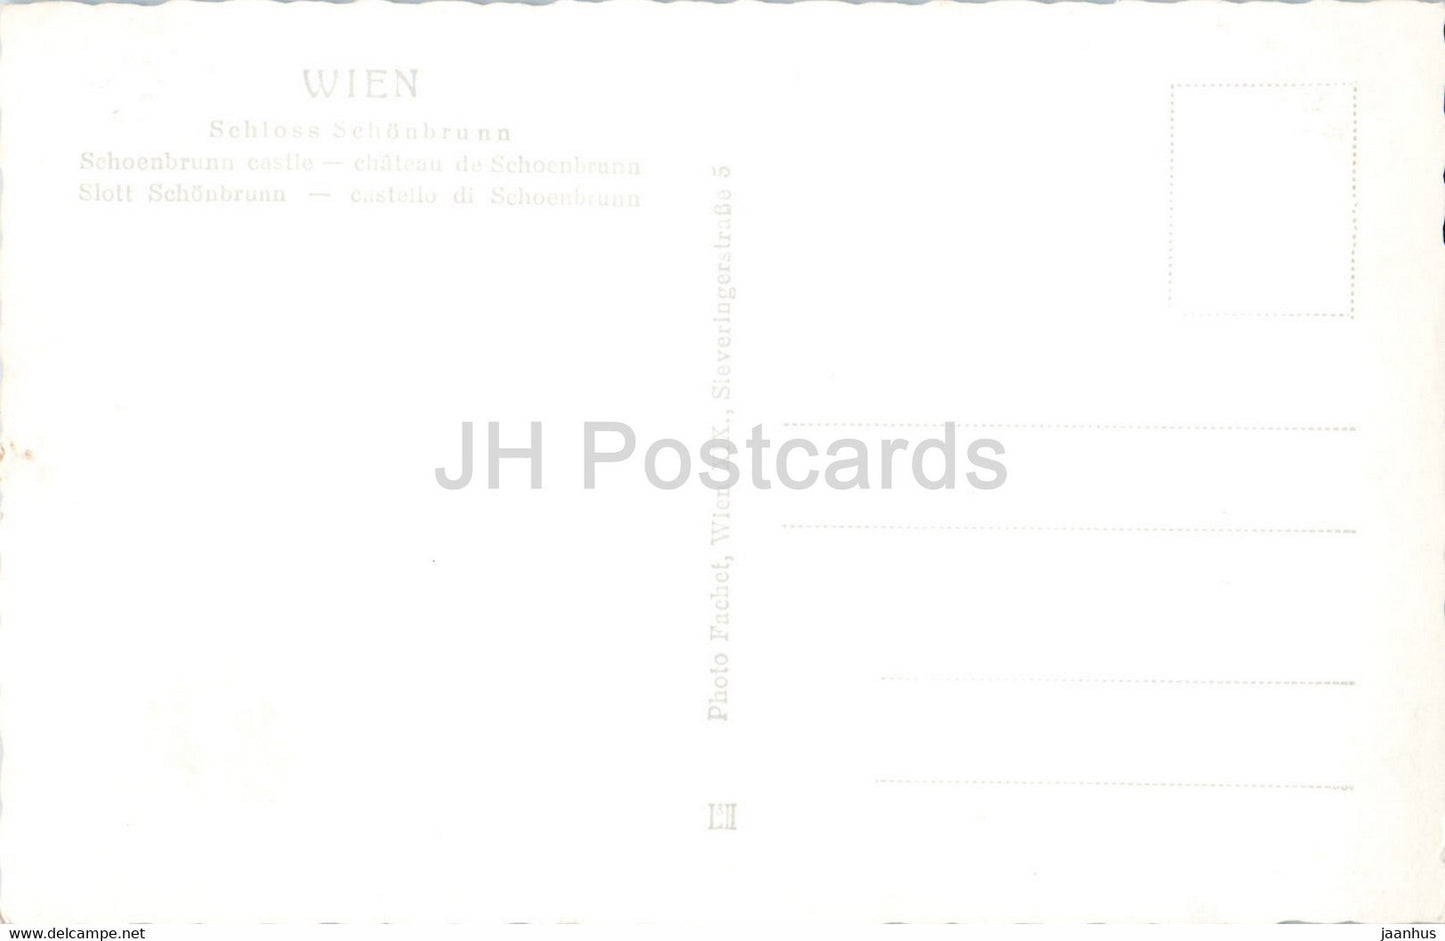 Wien - Vienne - Schloss Schönbrunn - couple - château - carte postale ancienne - Autriche - inutilisé